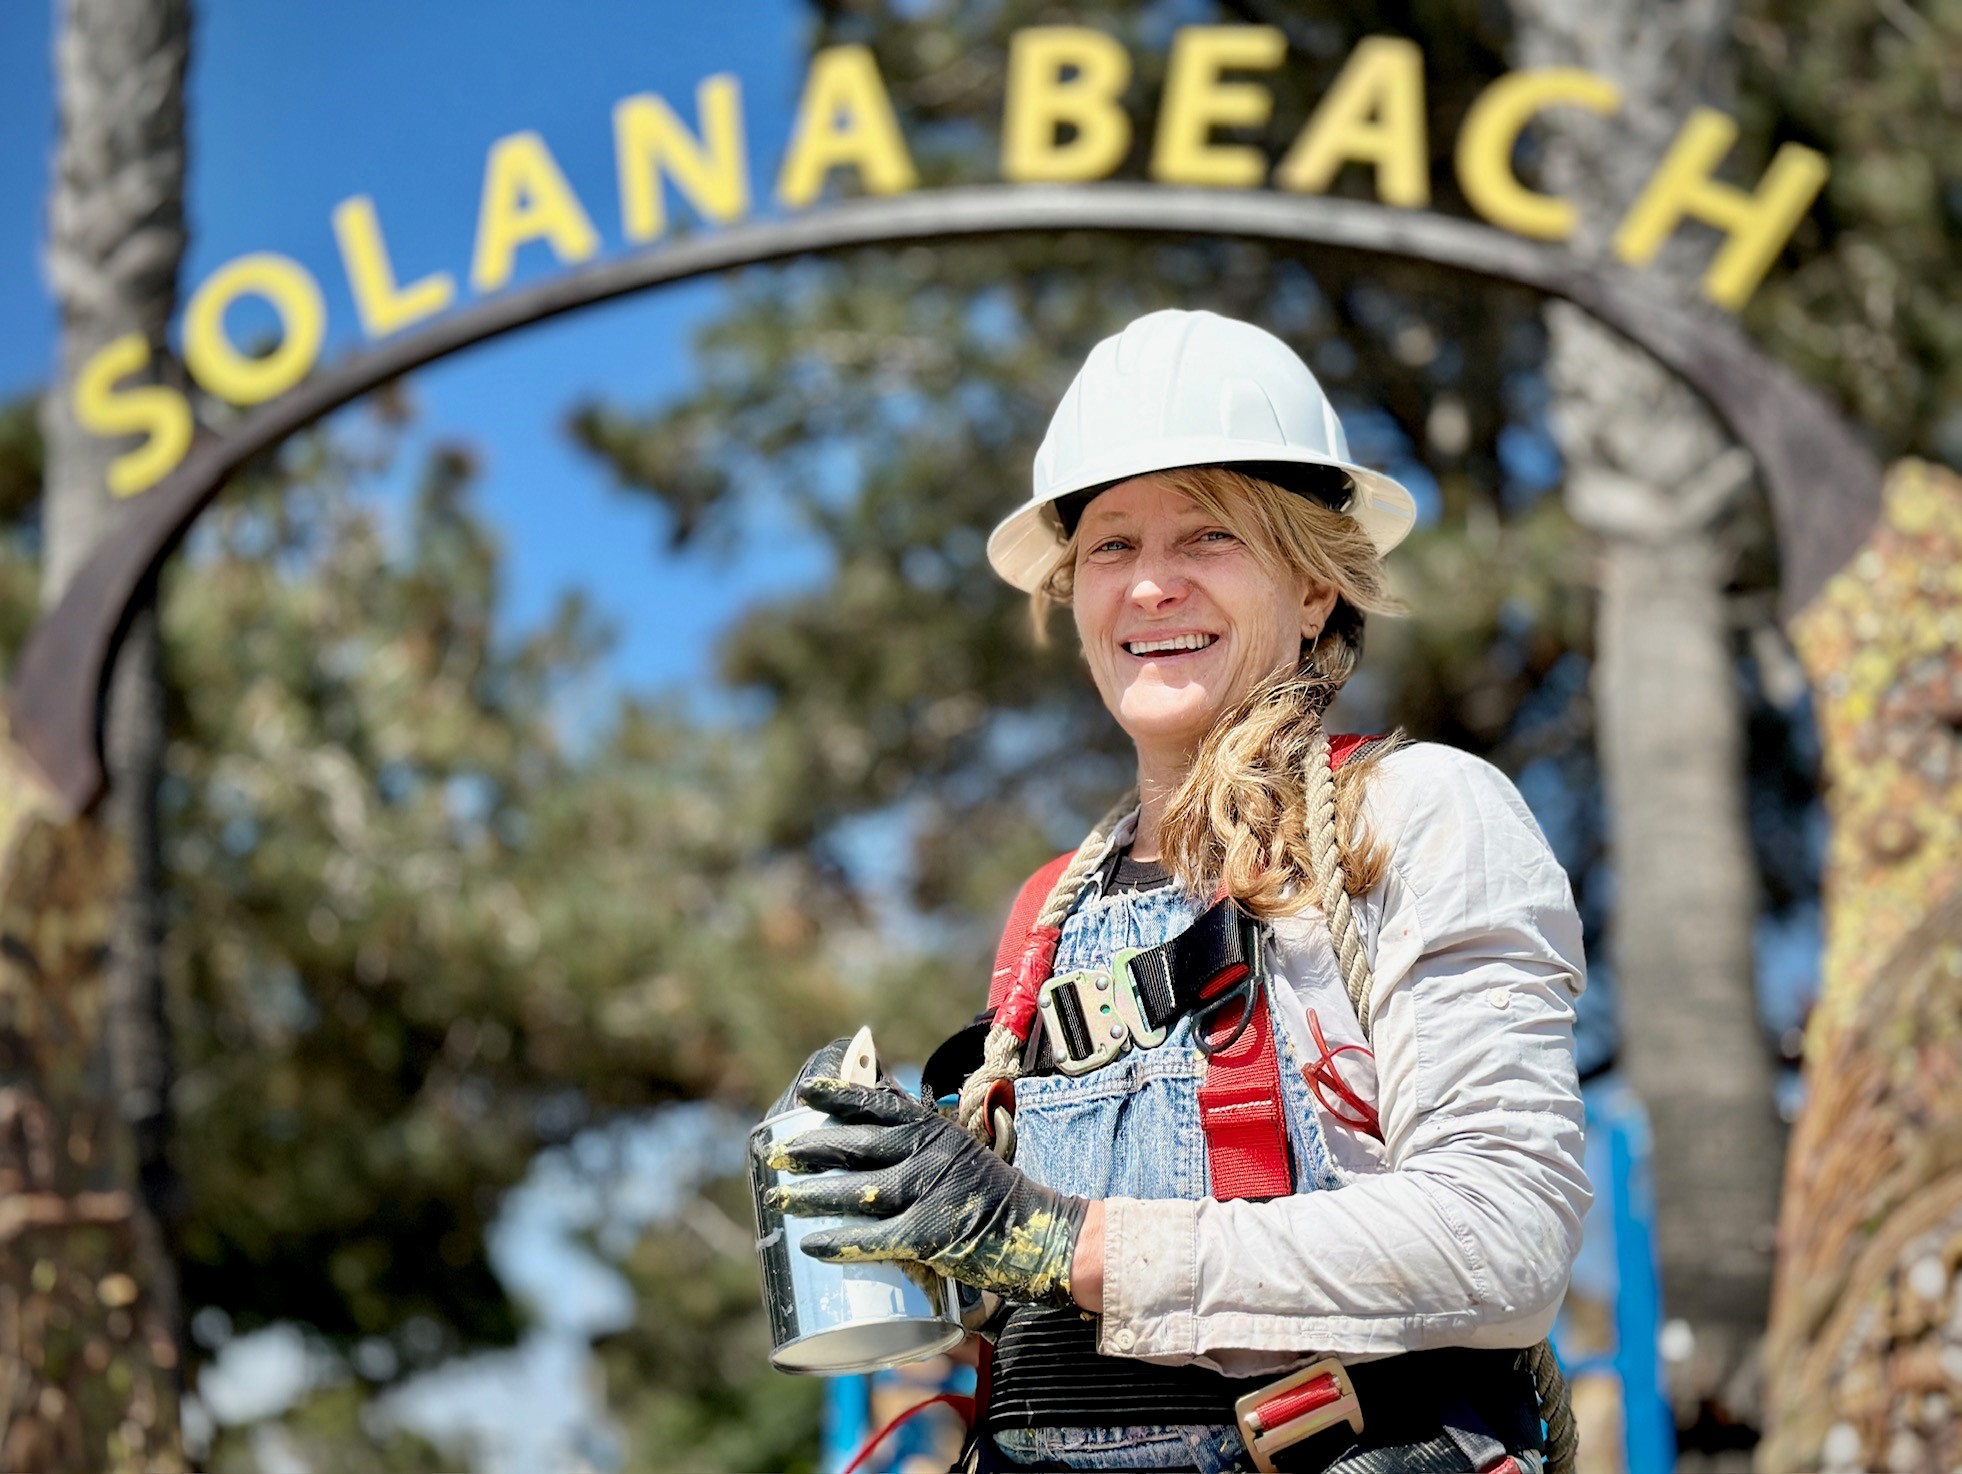 Preserving the Solana Beach Gateway Arches